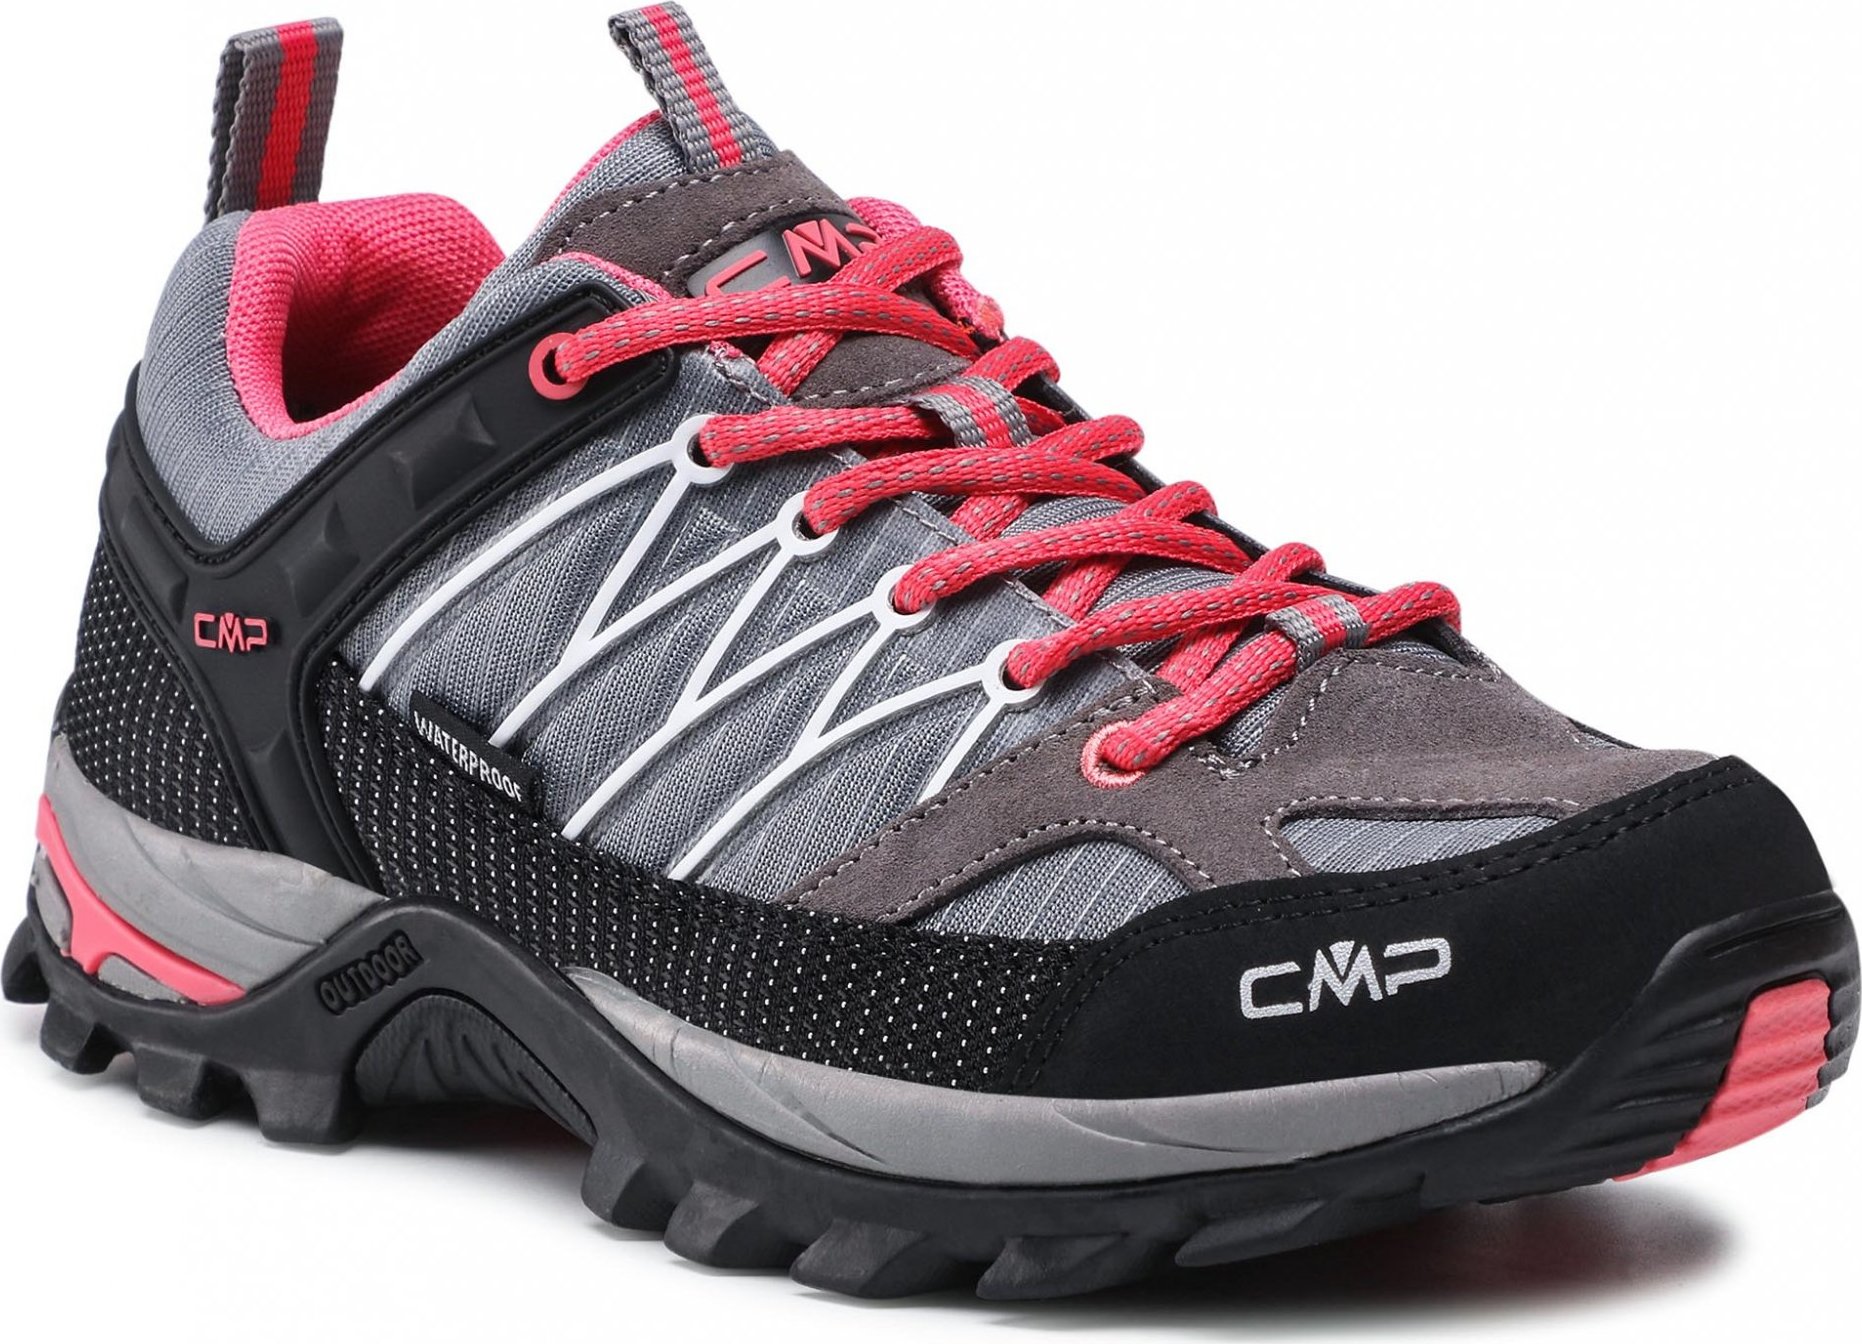 CMP Rigel Low Wmn Trekking Shoe Wp 3Q54456